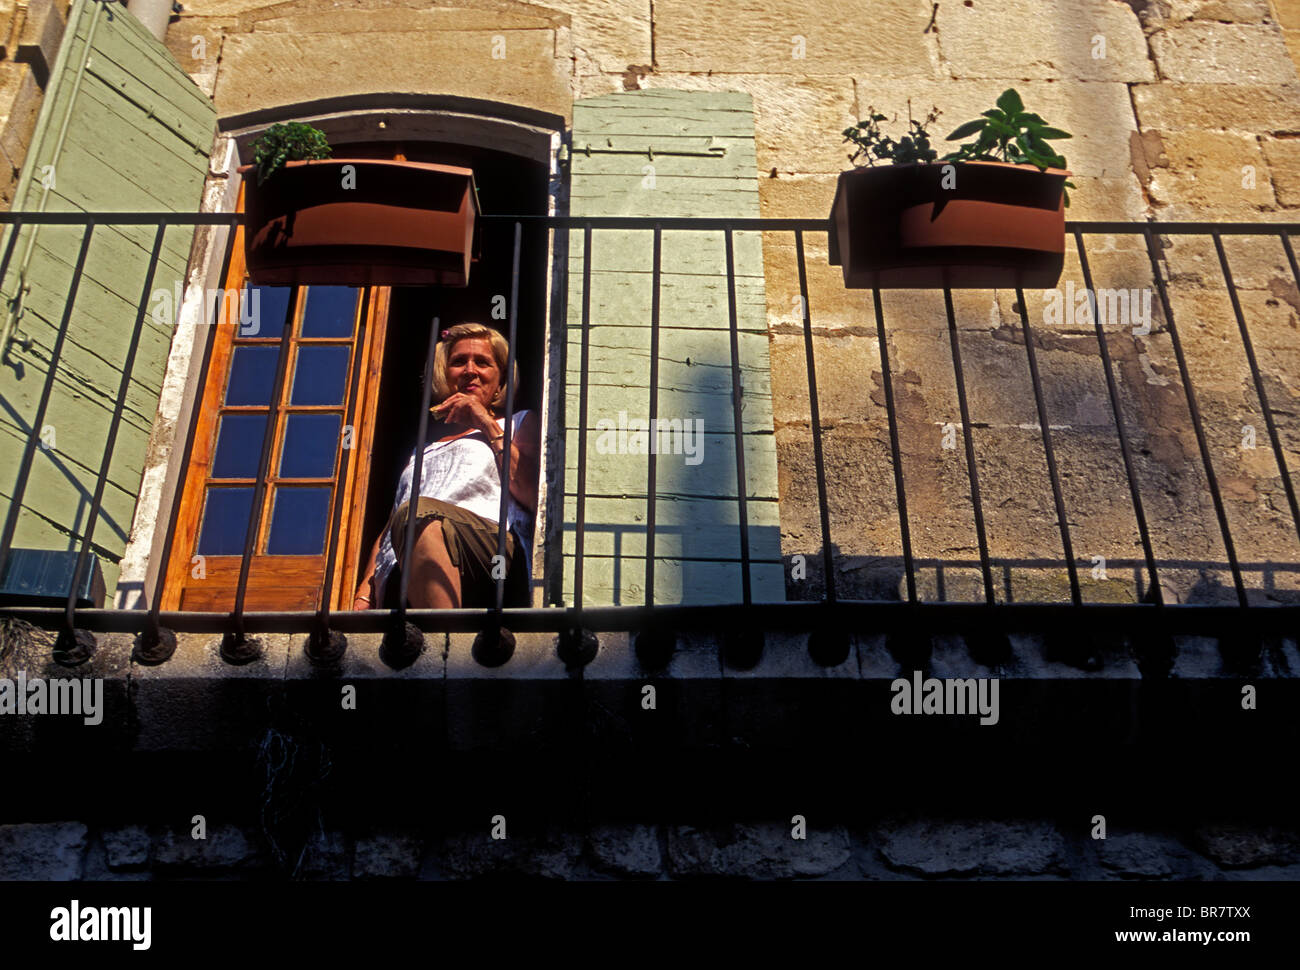 Französin, französische Frau, erwachsene Frau, reife Frau, Frau, auf dem  Balkon stehen, Saint-Remy-de-Provence, Bouches-du-Rhône, Provence,  Frankreich, Europa Stockfotografie - Alamy